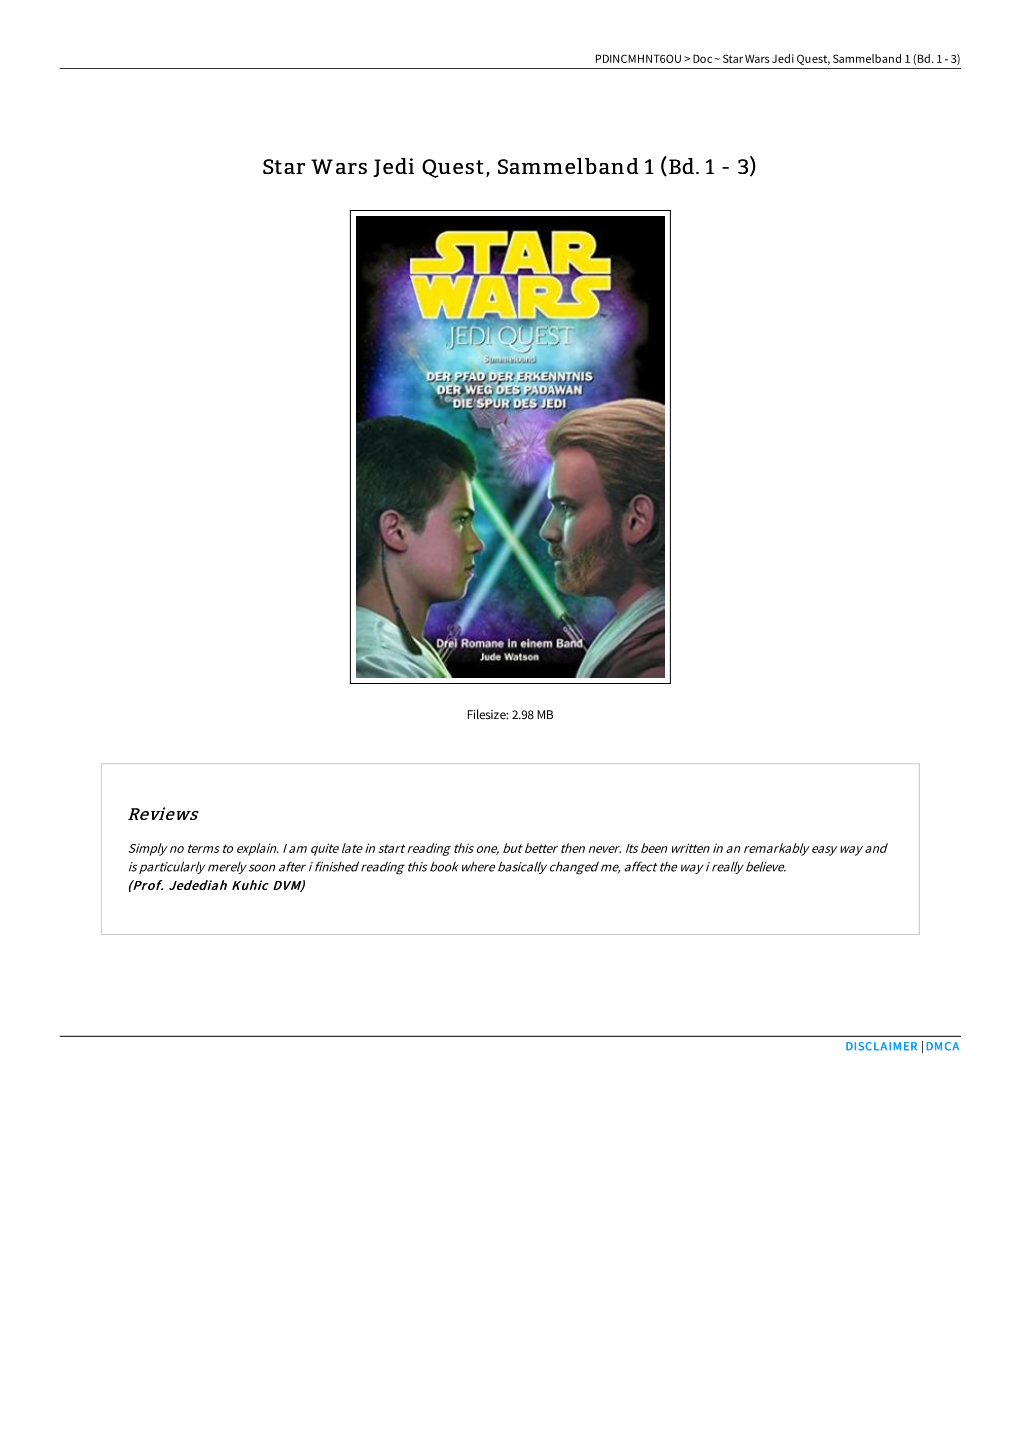 Download Ebook / Star Wars Jedi Quest, Sammelband 1